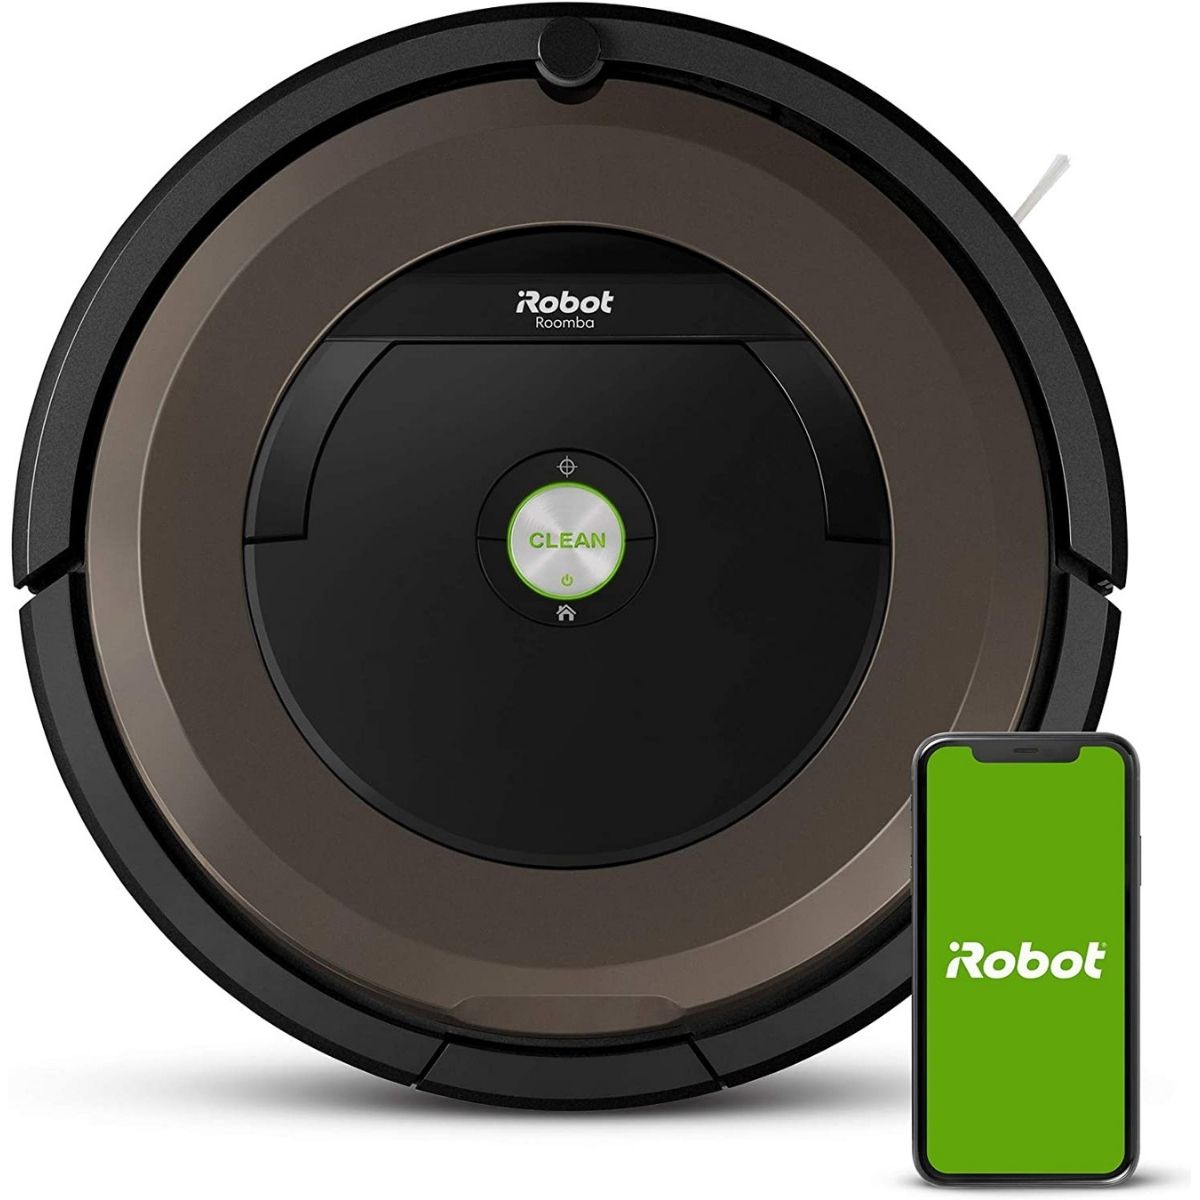 The Roomba Black Friday Option: iRobot Roomba 890 Robot Vacuum